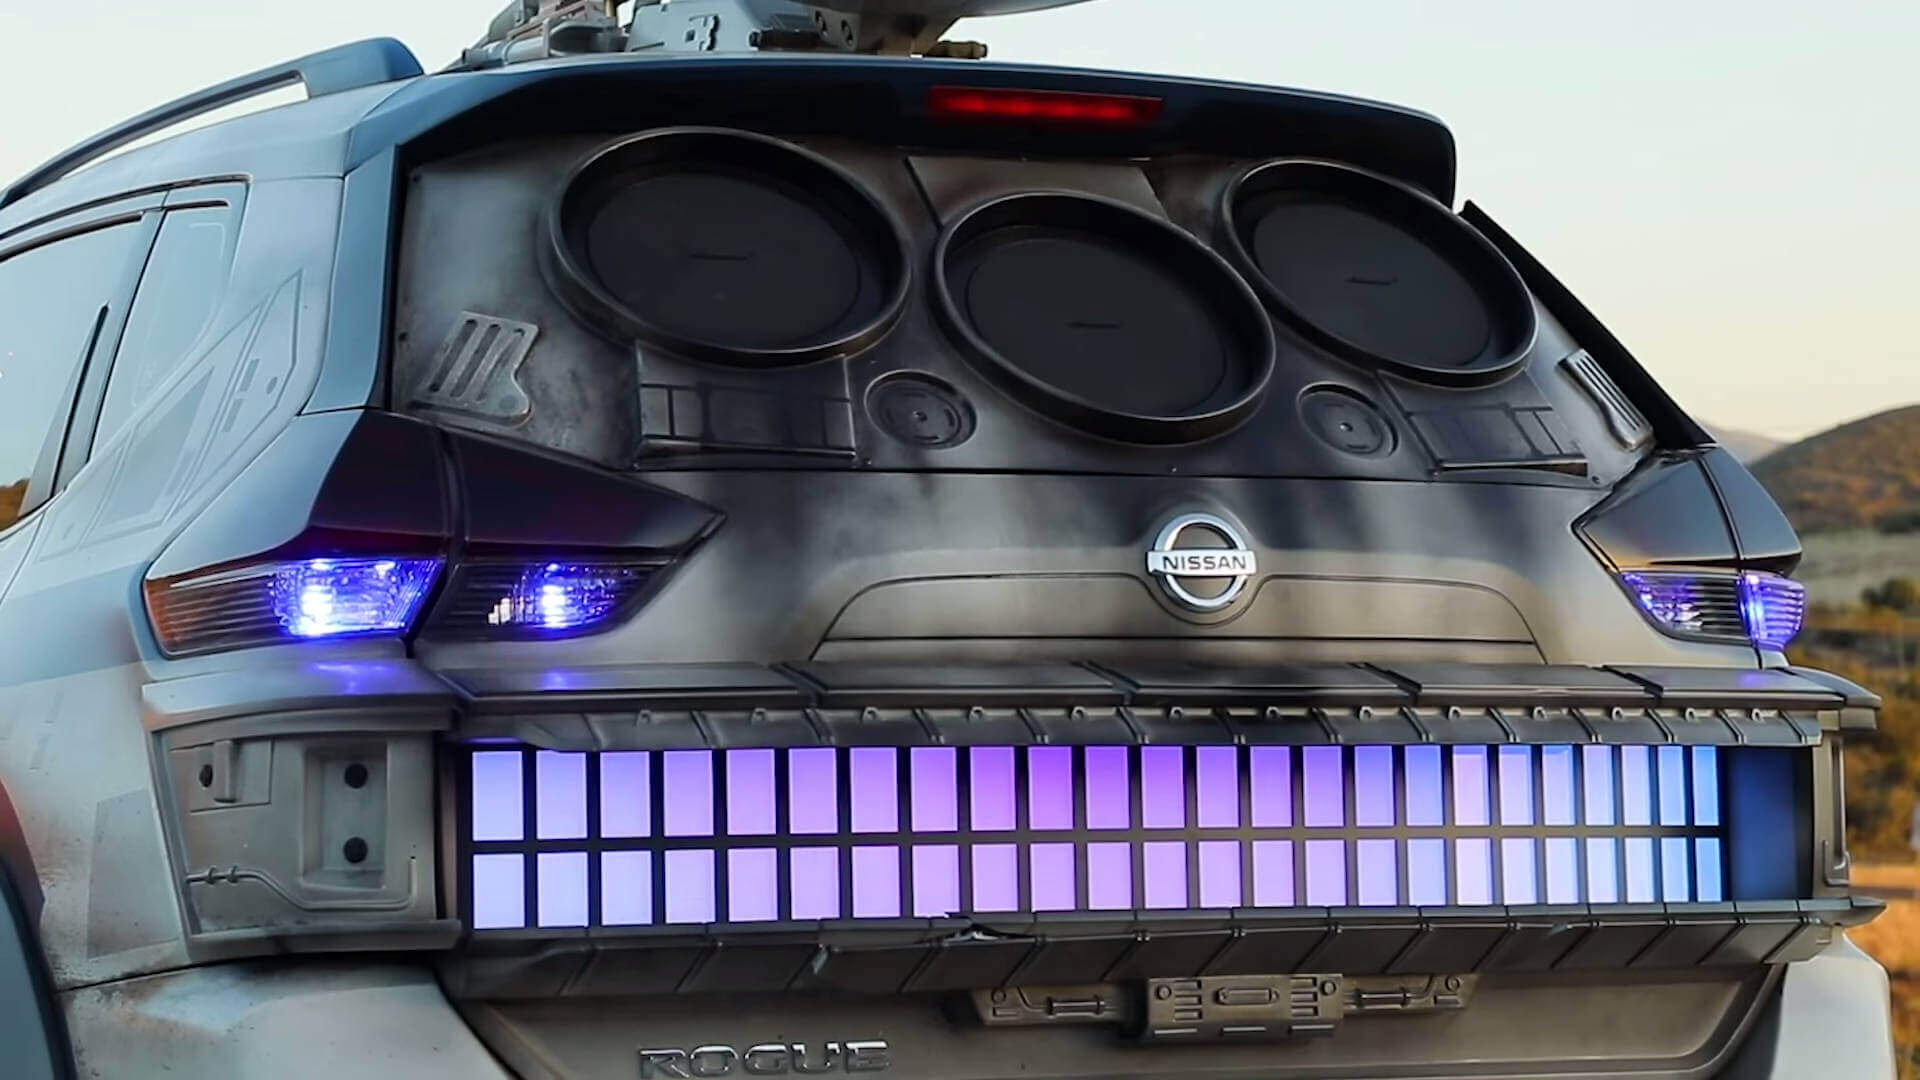 Nissan Rogue Star Wars Themed Show Vehicle screenshot 5